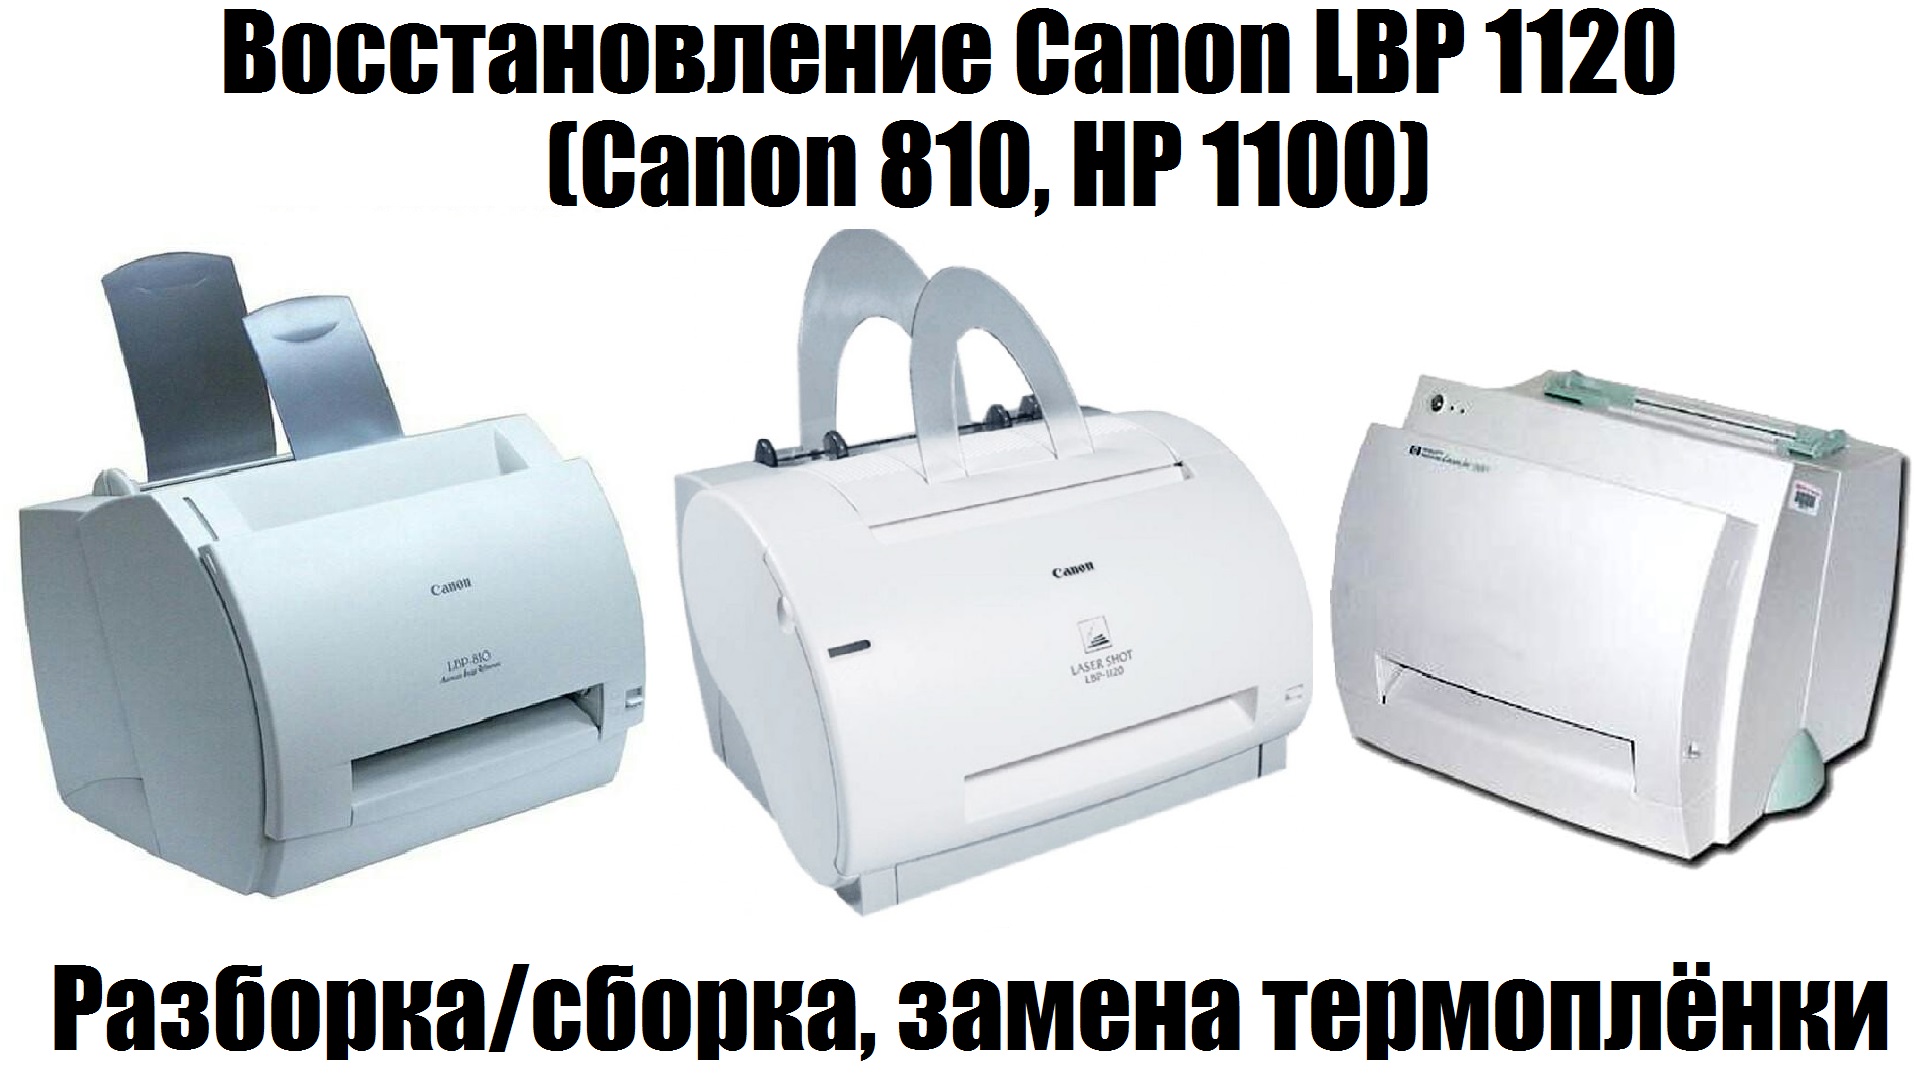 Canon lbp 810 драйвер windows 10. Принтер Canon LBP-1120. Принтер LBP 1120. Принтер Canon 1120. Принтер Canon LBP-810.